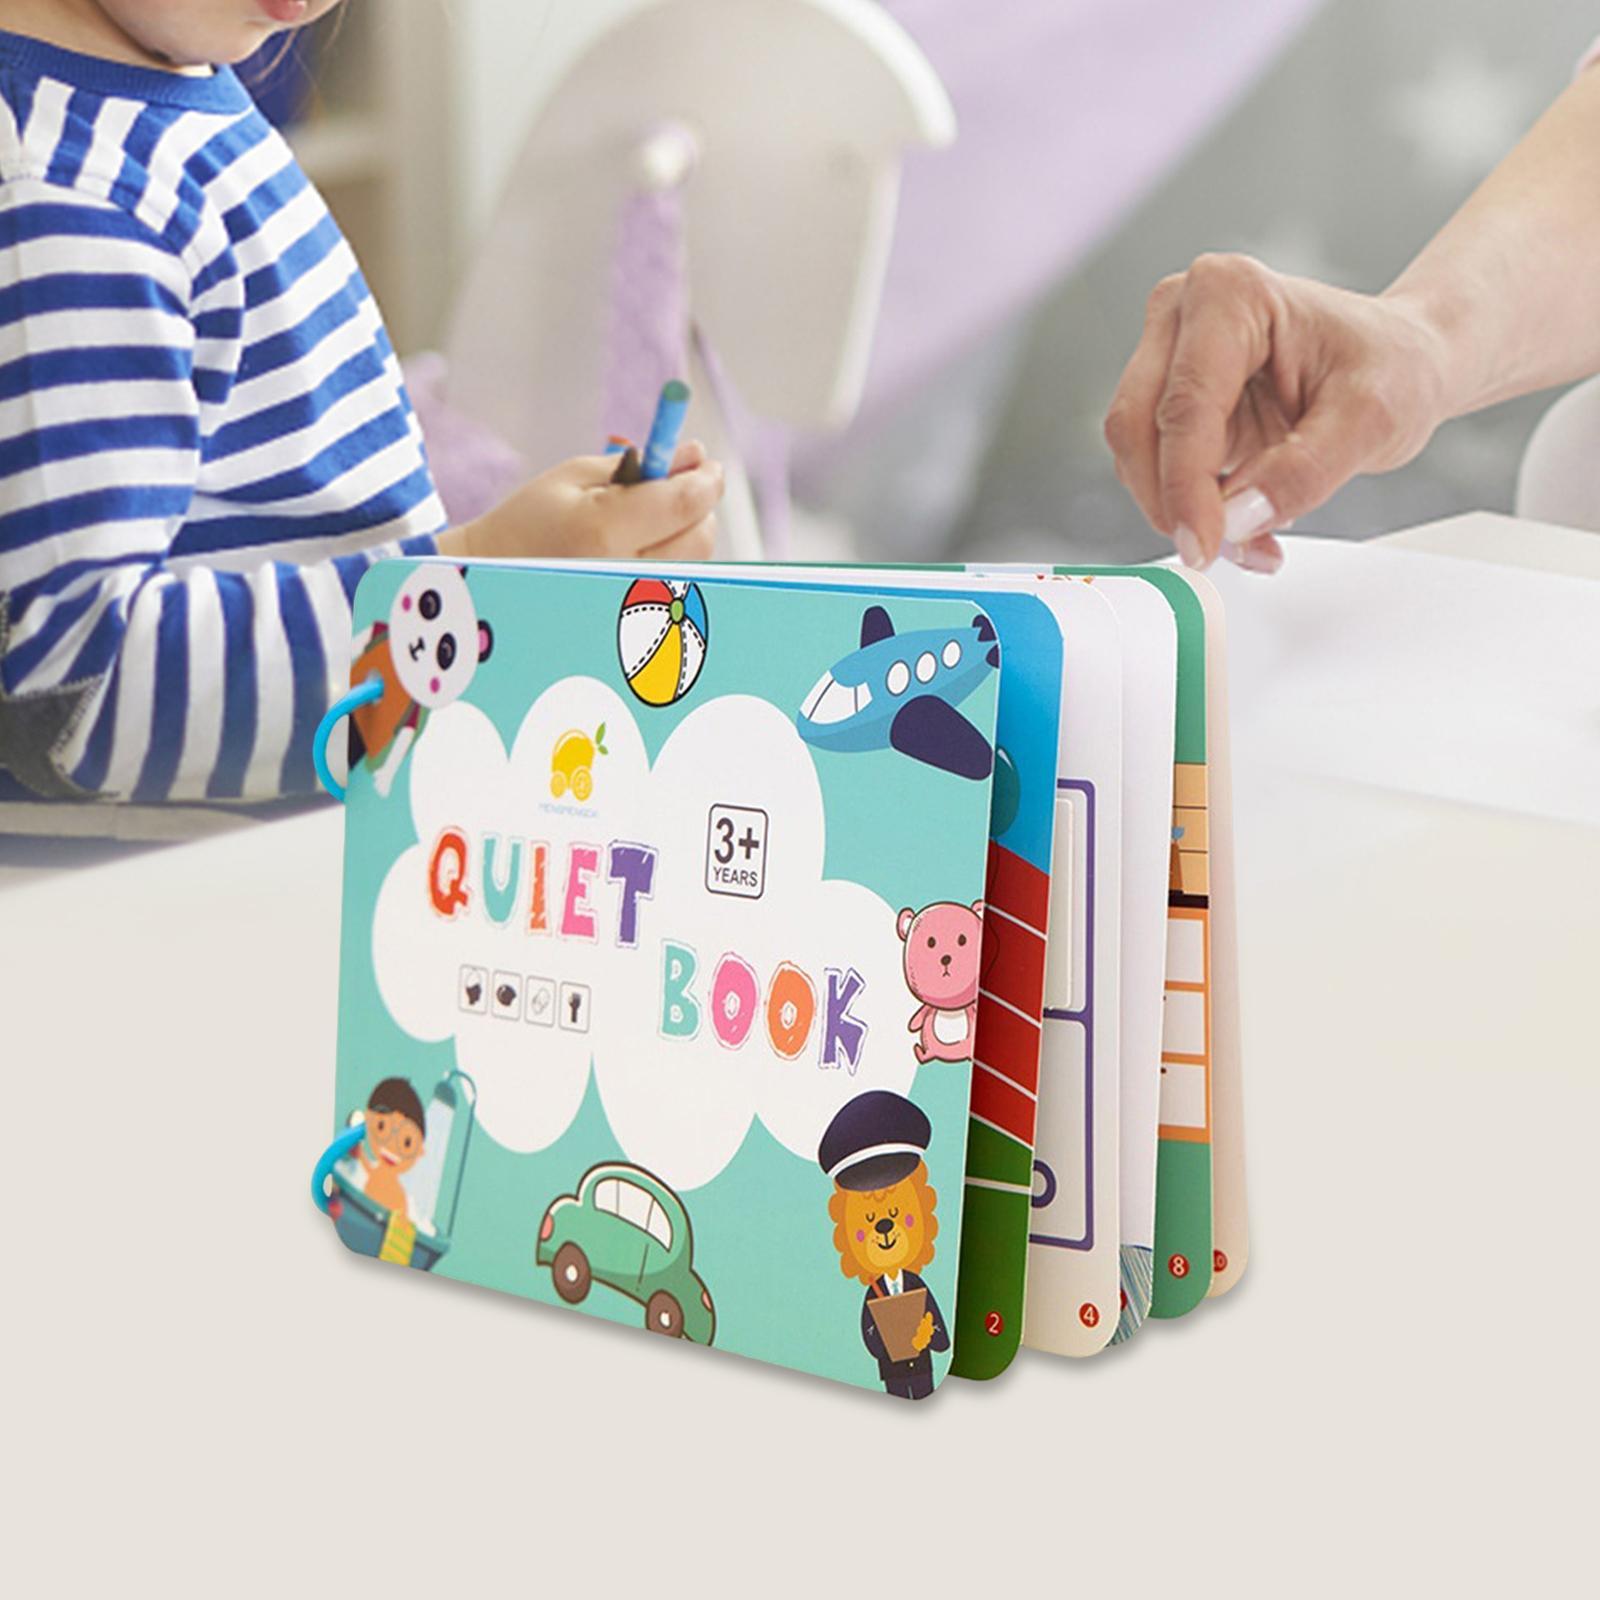 Baby Sticker Toy Preschool Learning Sensory Toy Development for Toddler